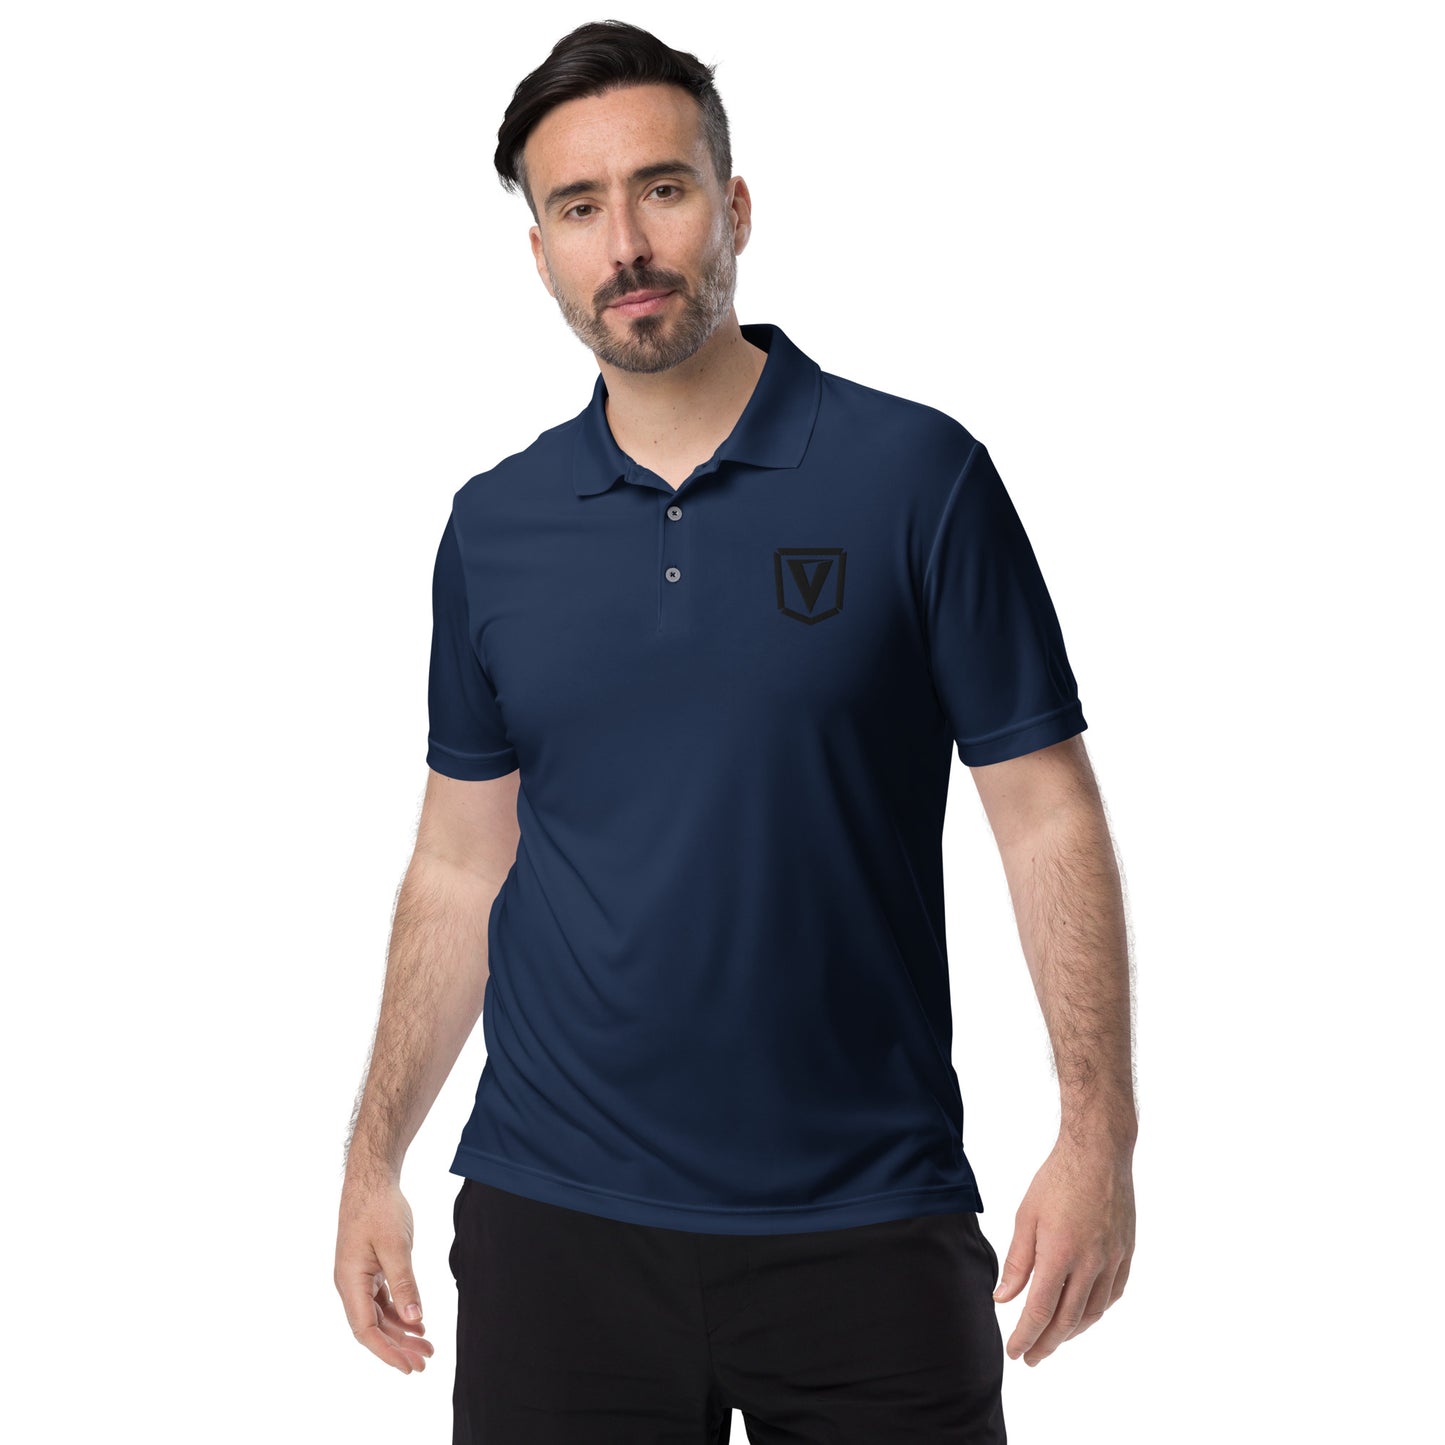 Variant Polo Shirt